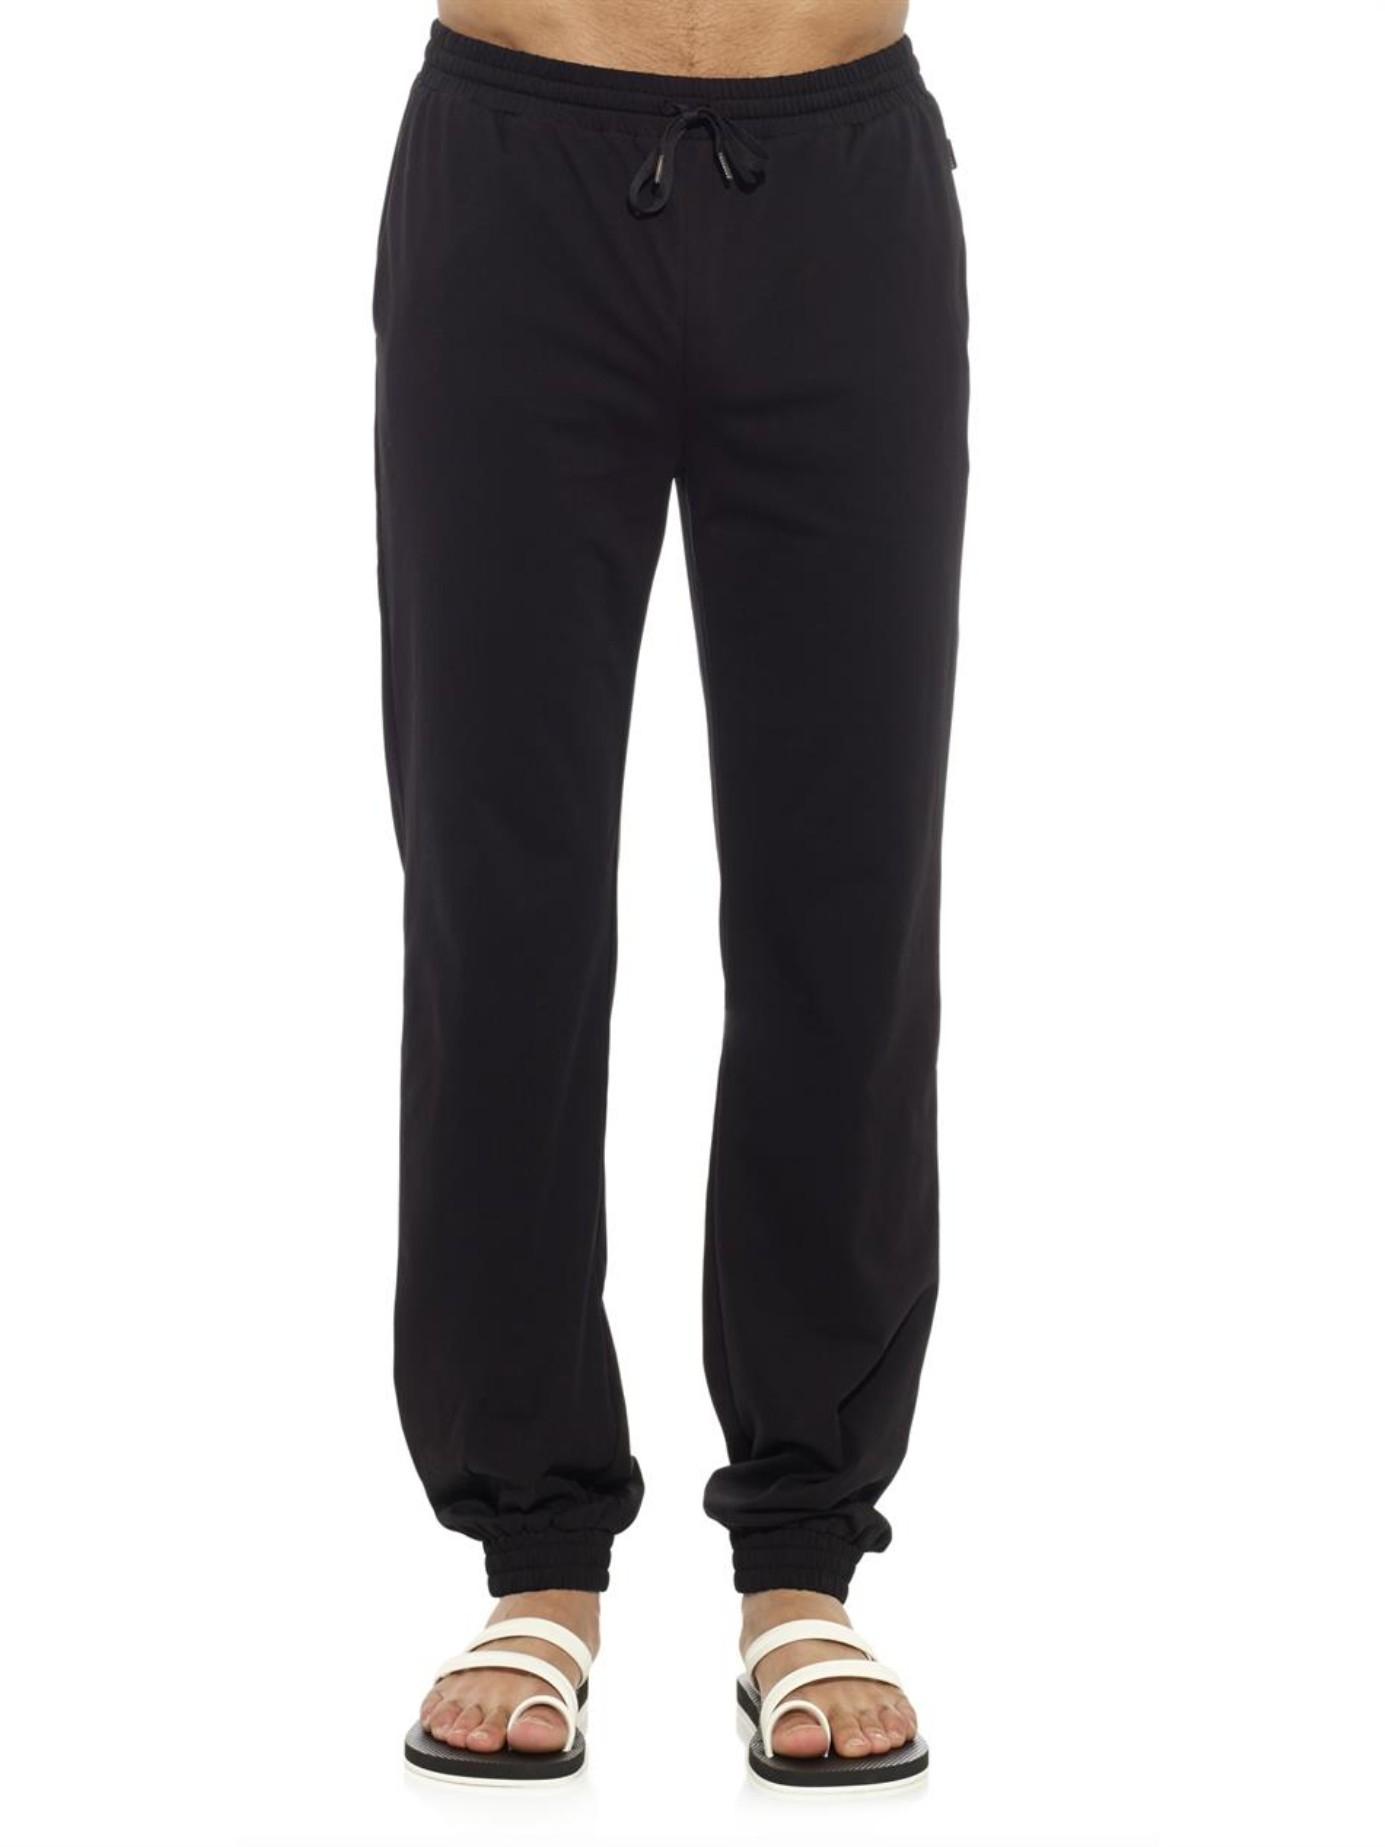 Lyst - Danward Cotton-Jersey Track Pants in Black for Men